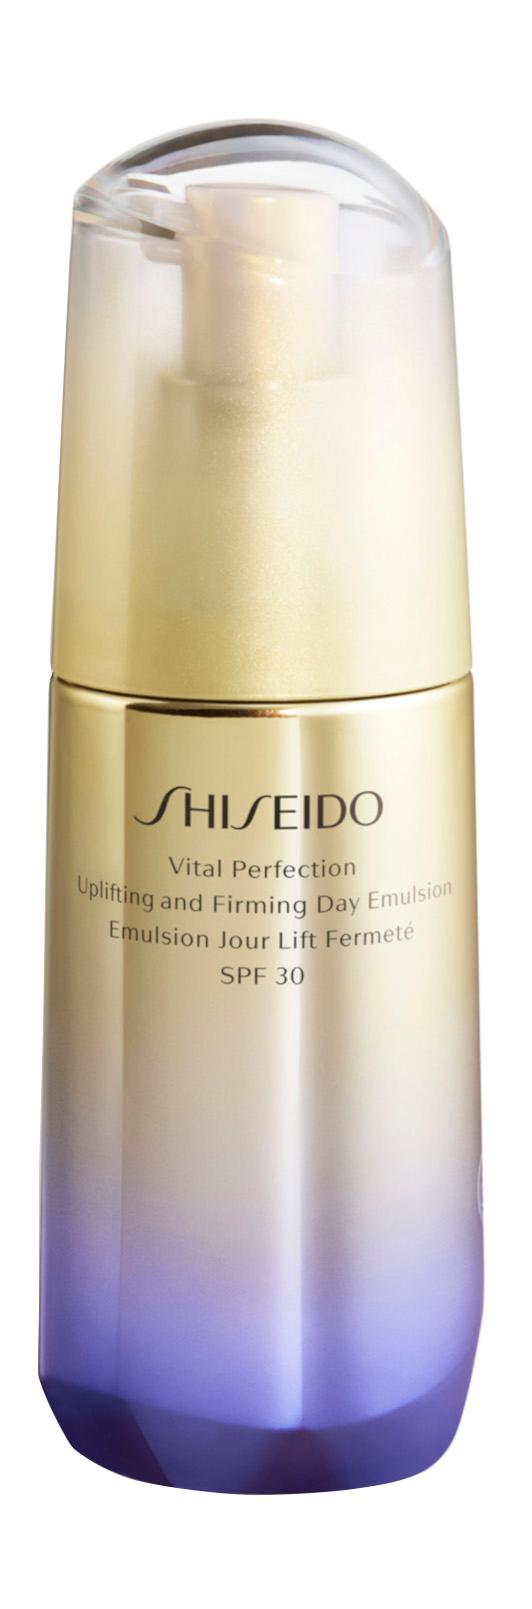 фото Эмульсия для лица shiseido vital perfection uplifting and firming day emulsion spf30 75 мл